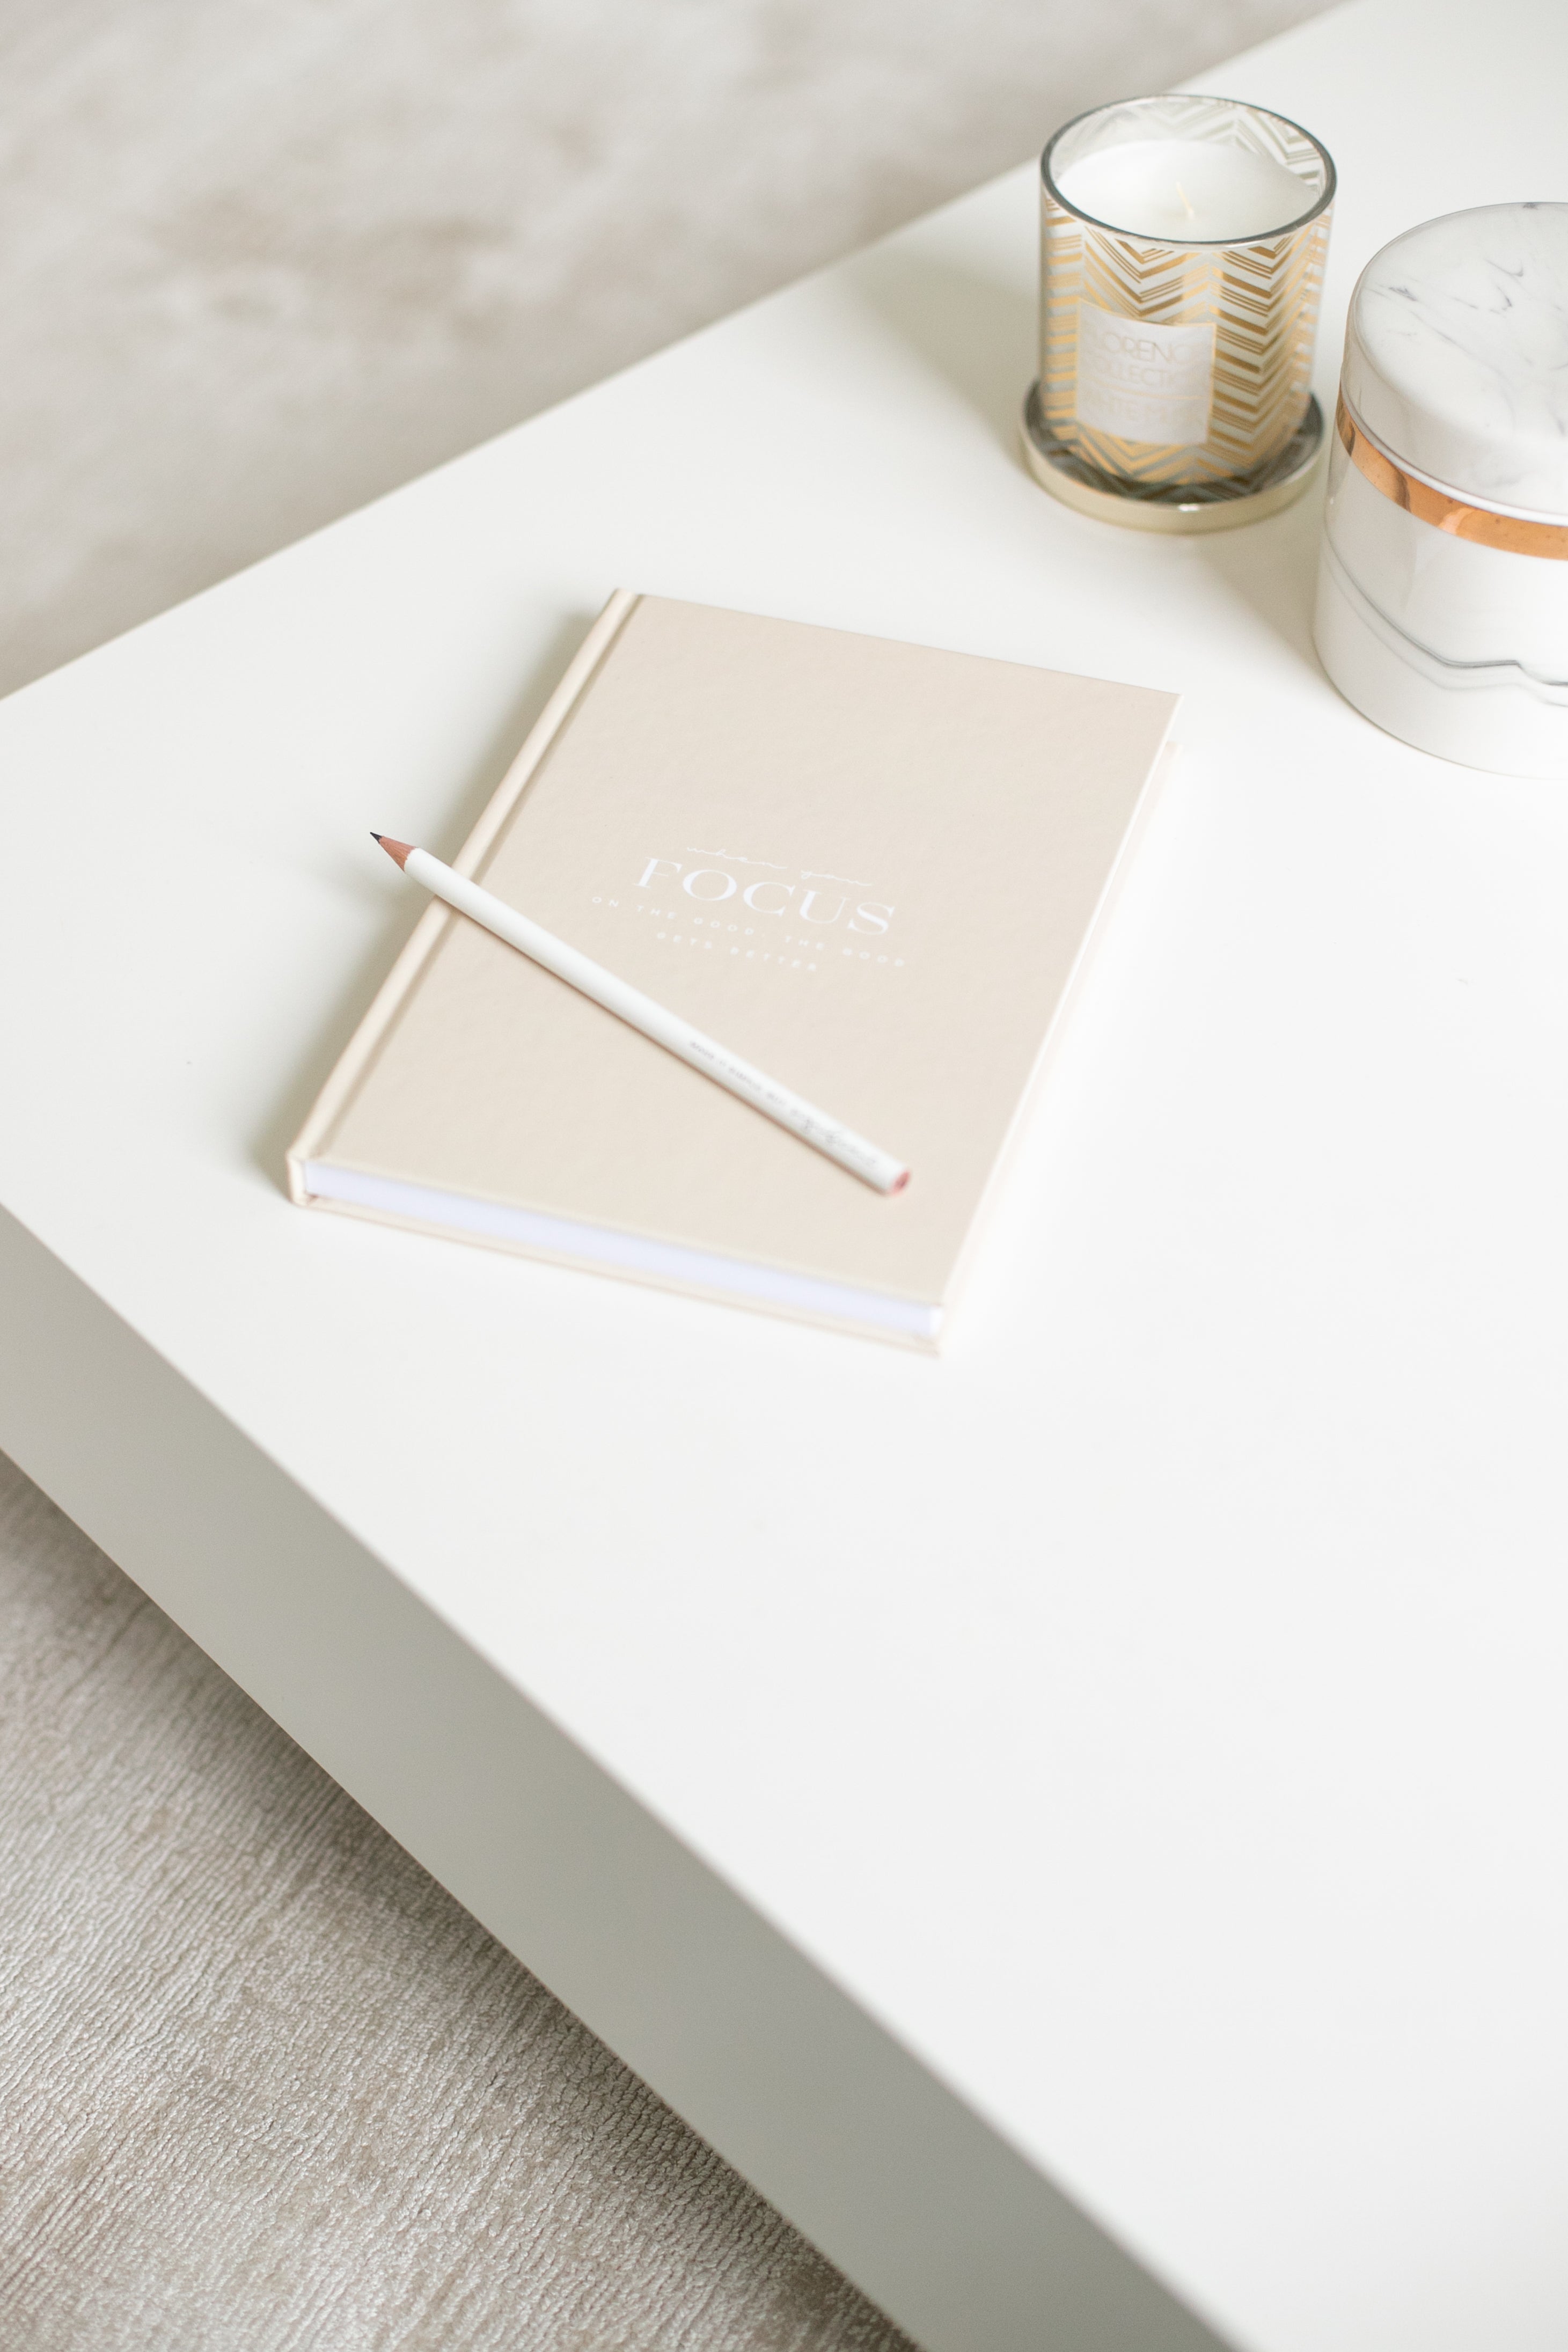 Notizbuch | Coffee Tablebook | "Focus on the good"